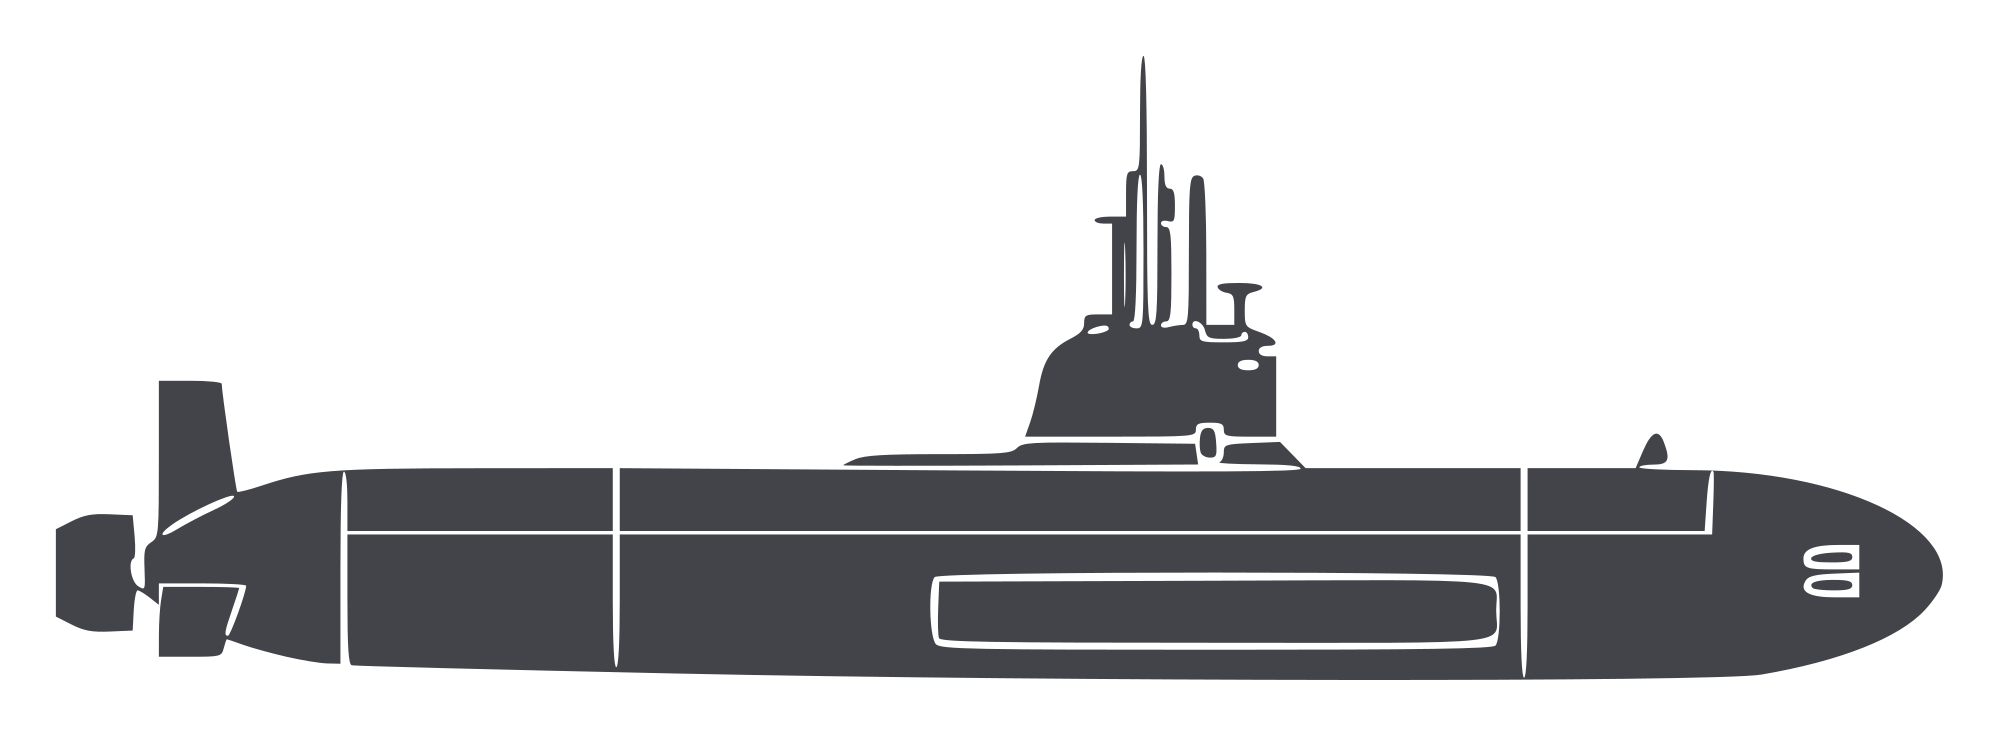 Submarine PNG Image Transparent